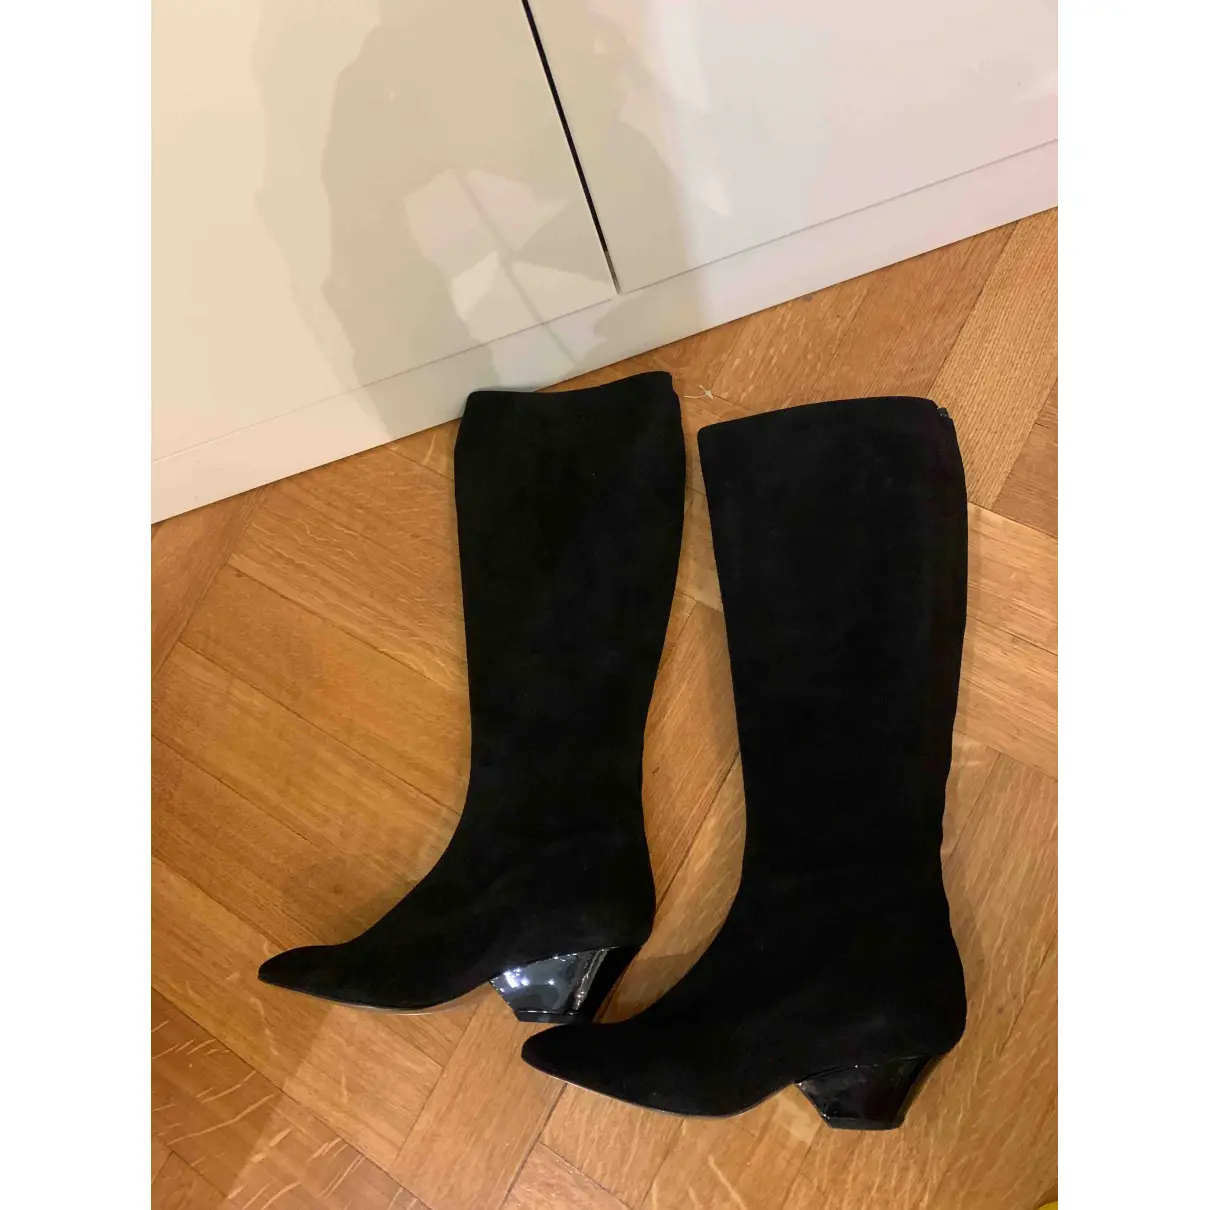 Buy Donna Karan Boots online